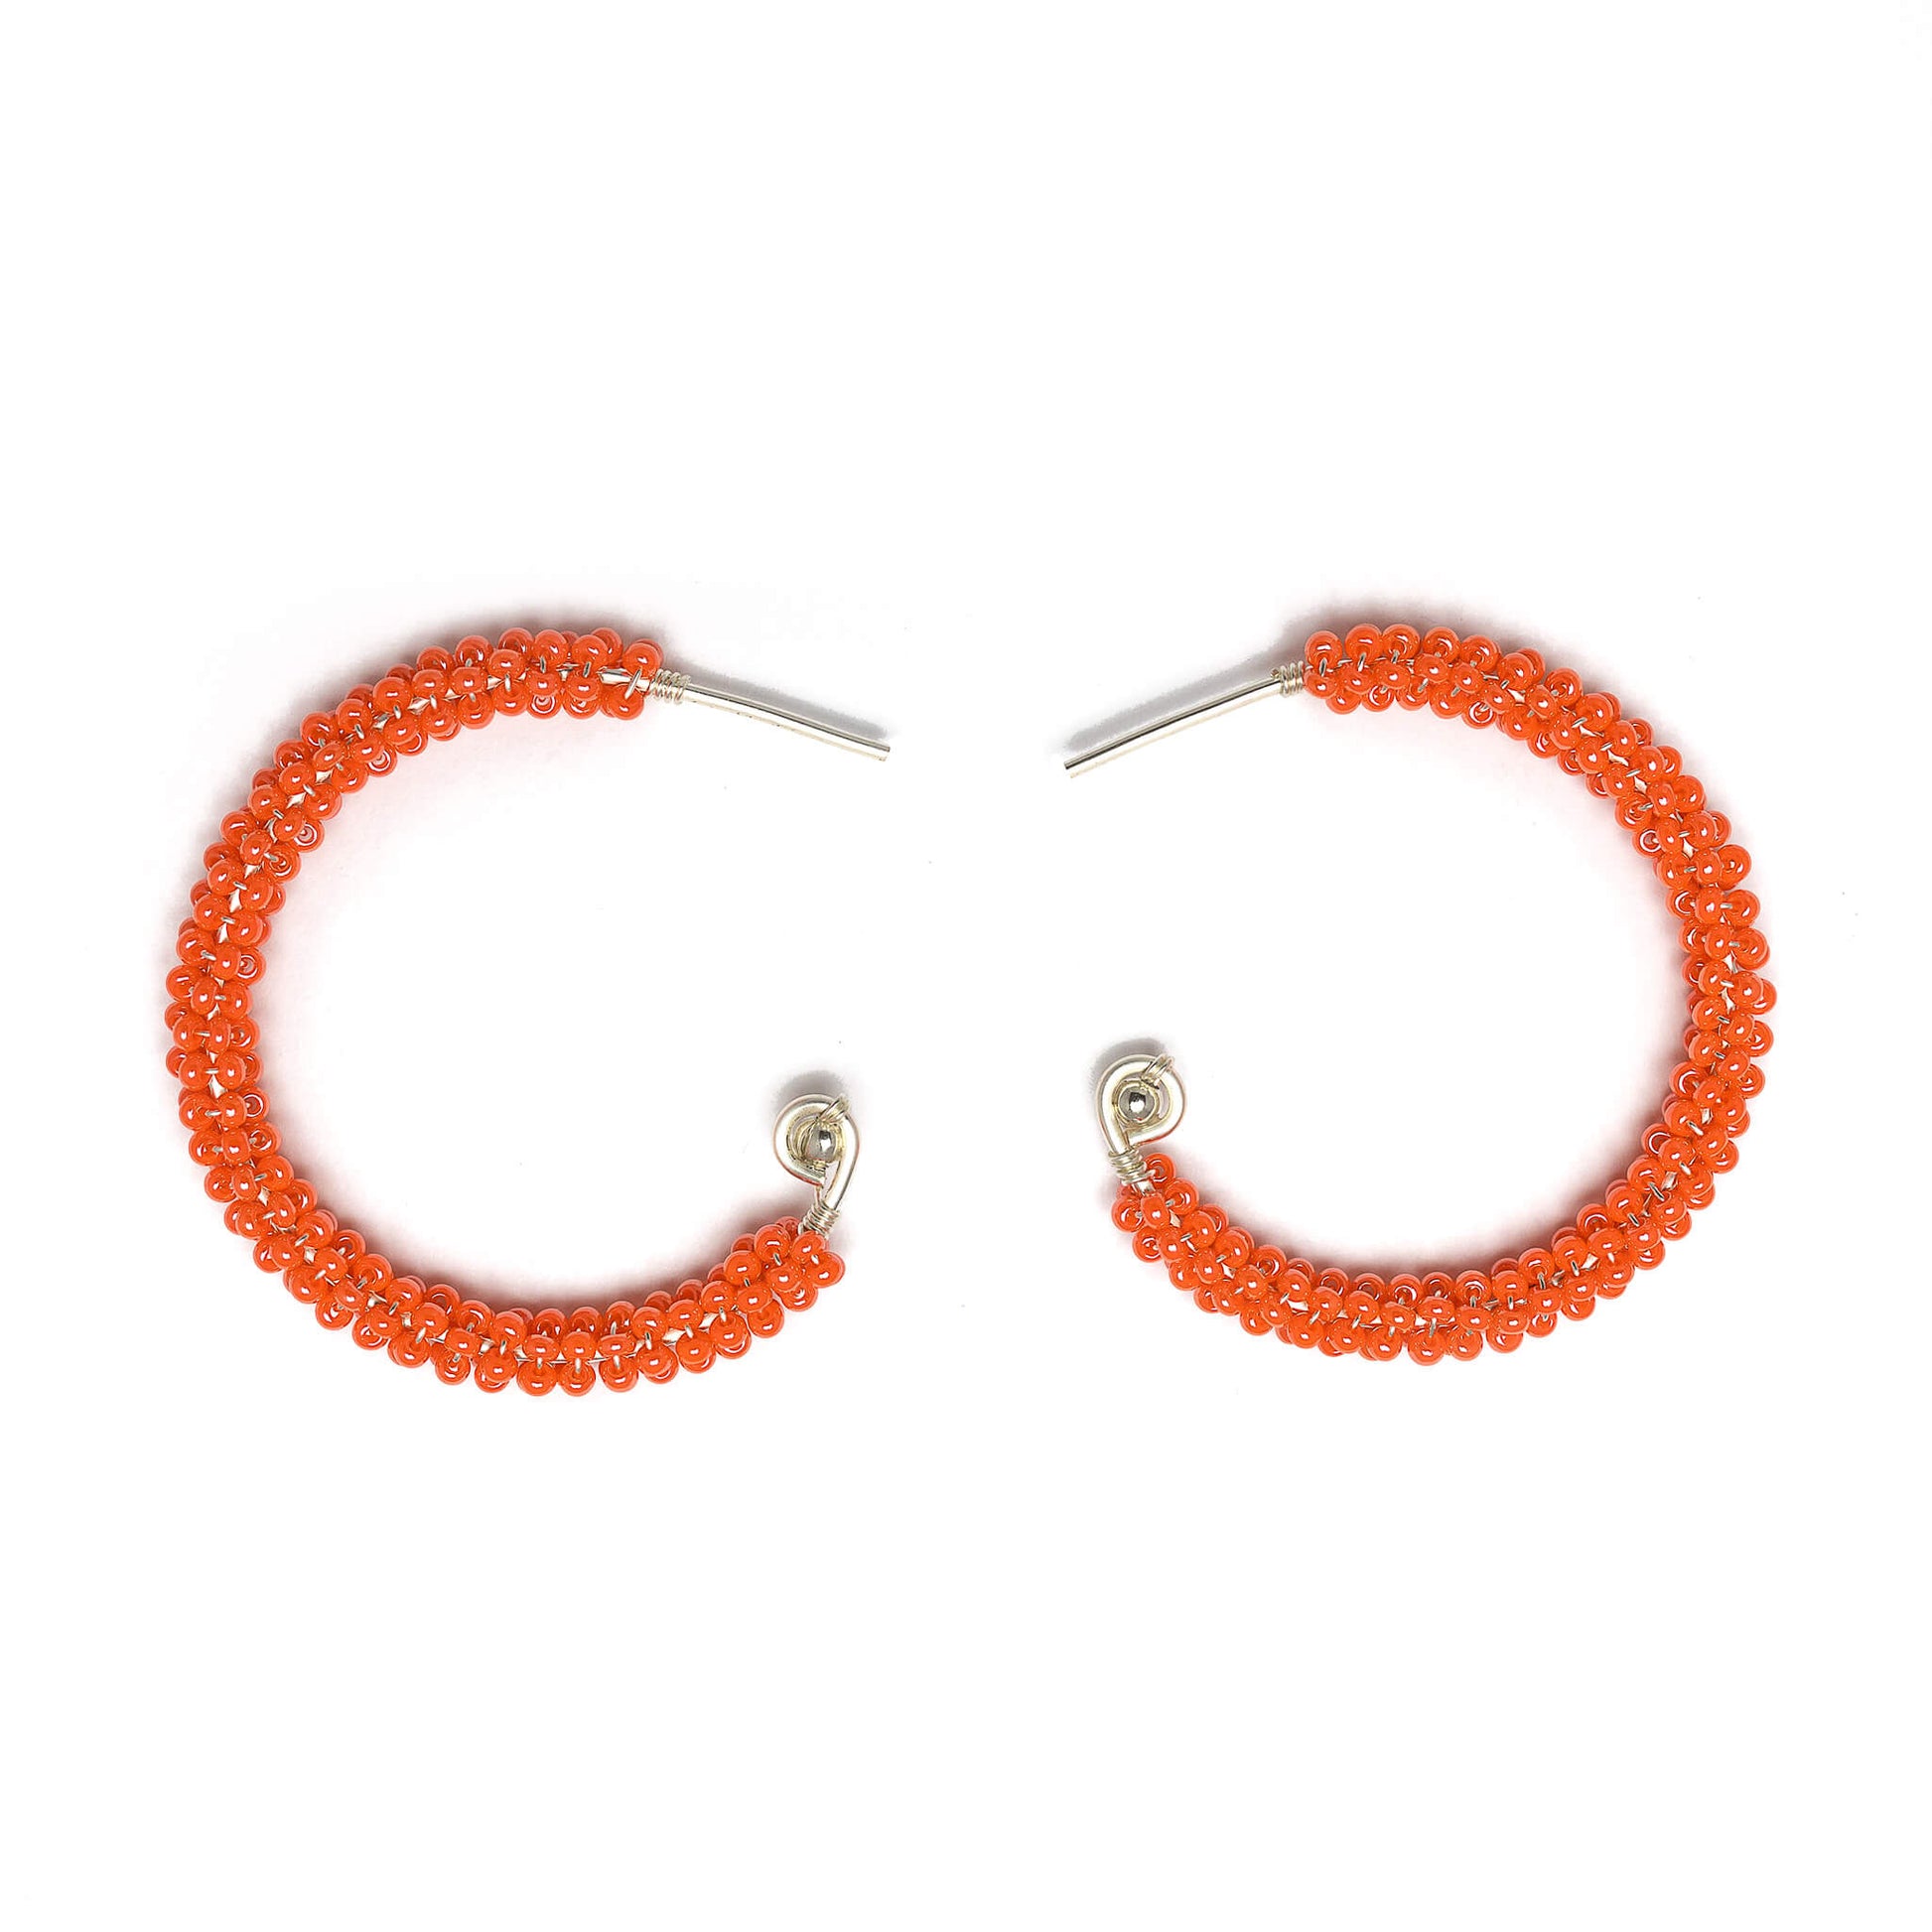 Florence Silver Hoop Earrings are 1.5 inches long, Silver and Orange Earrings. Wire Wrapped Earrings. Lightweight and comfortable earrings. Handmade for women. Open hoop earrings